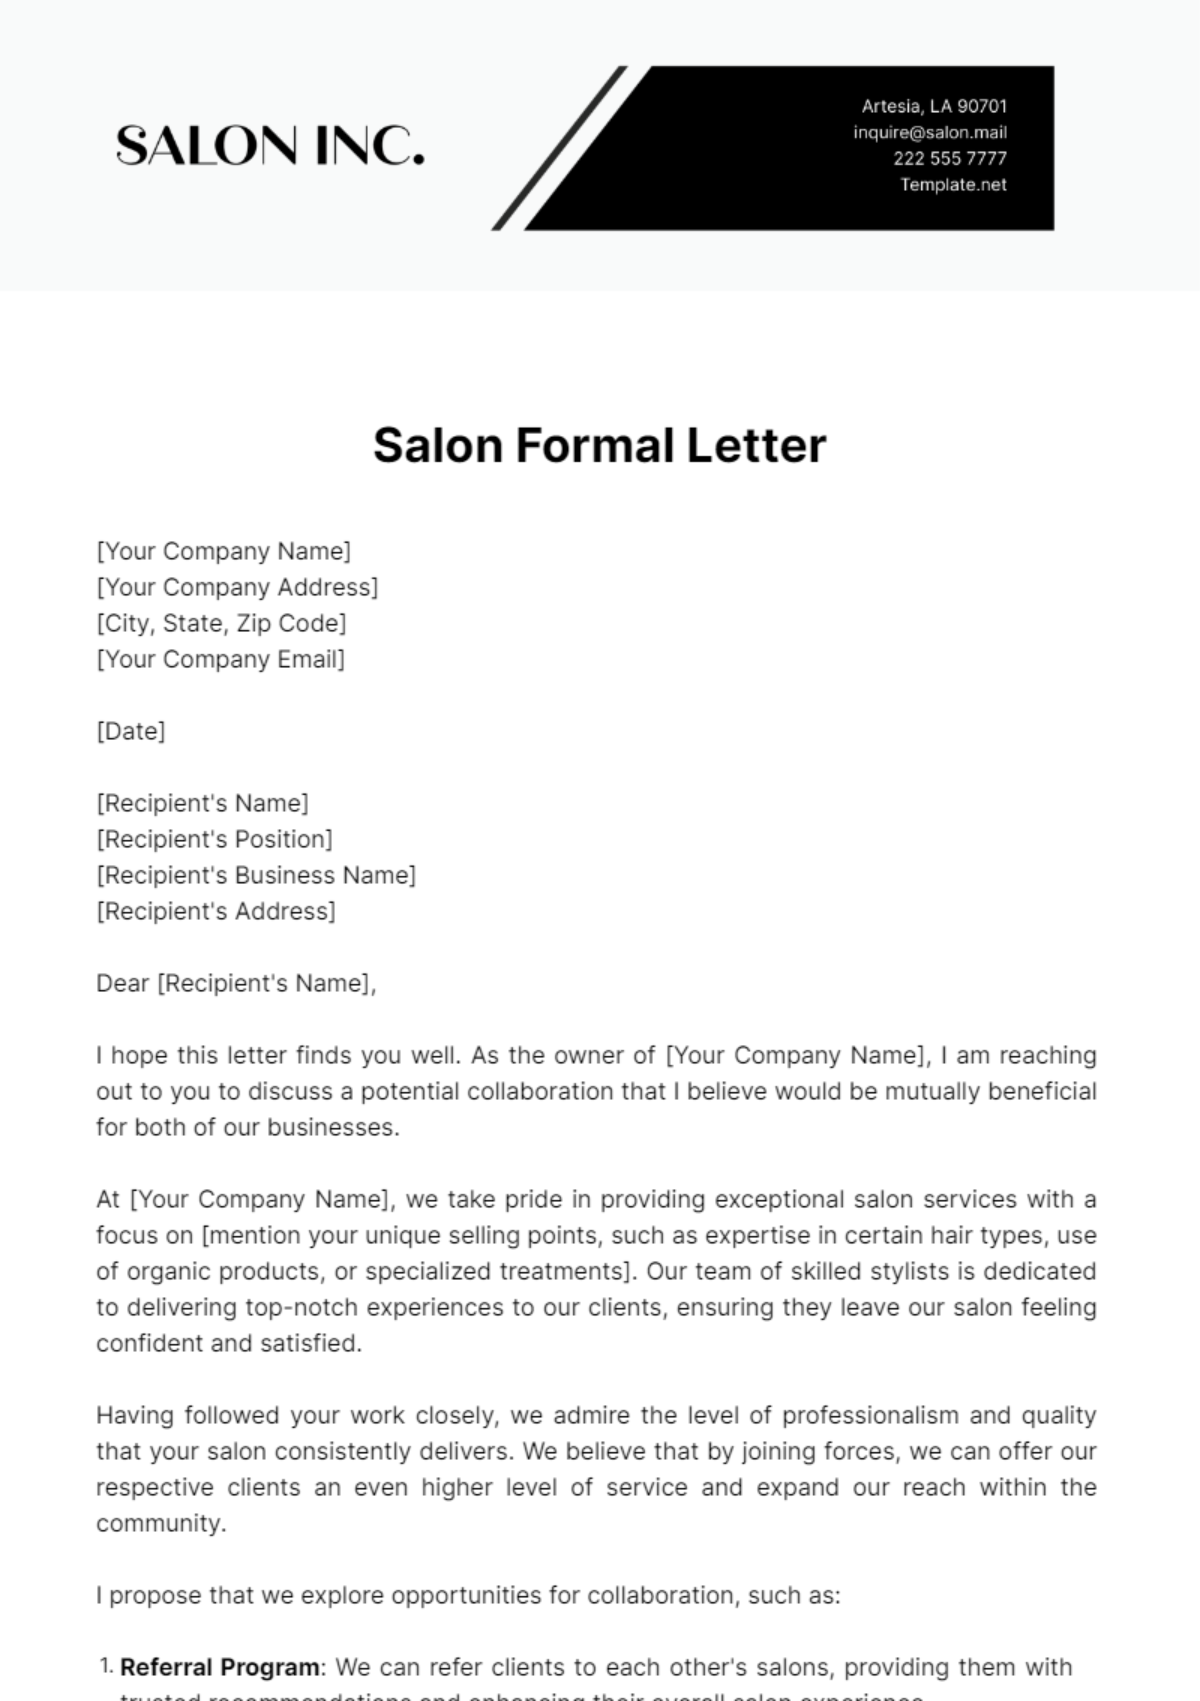 Free Salon Formal Letter Template